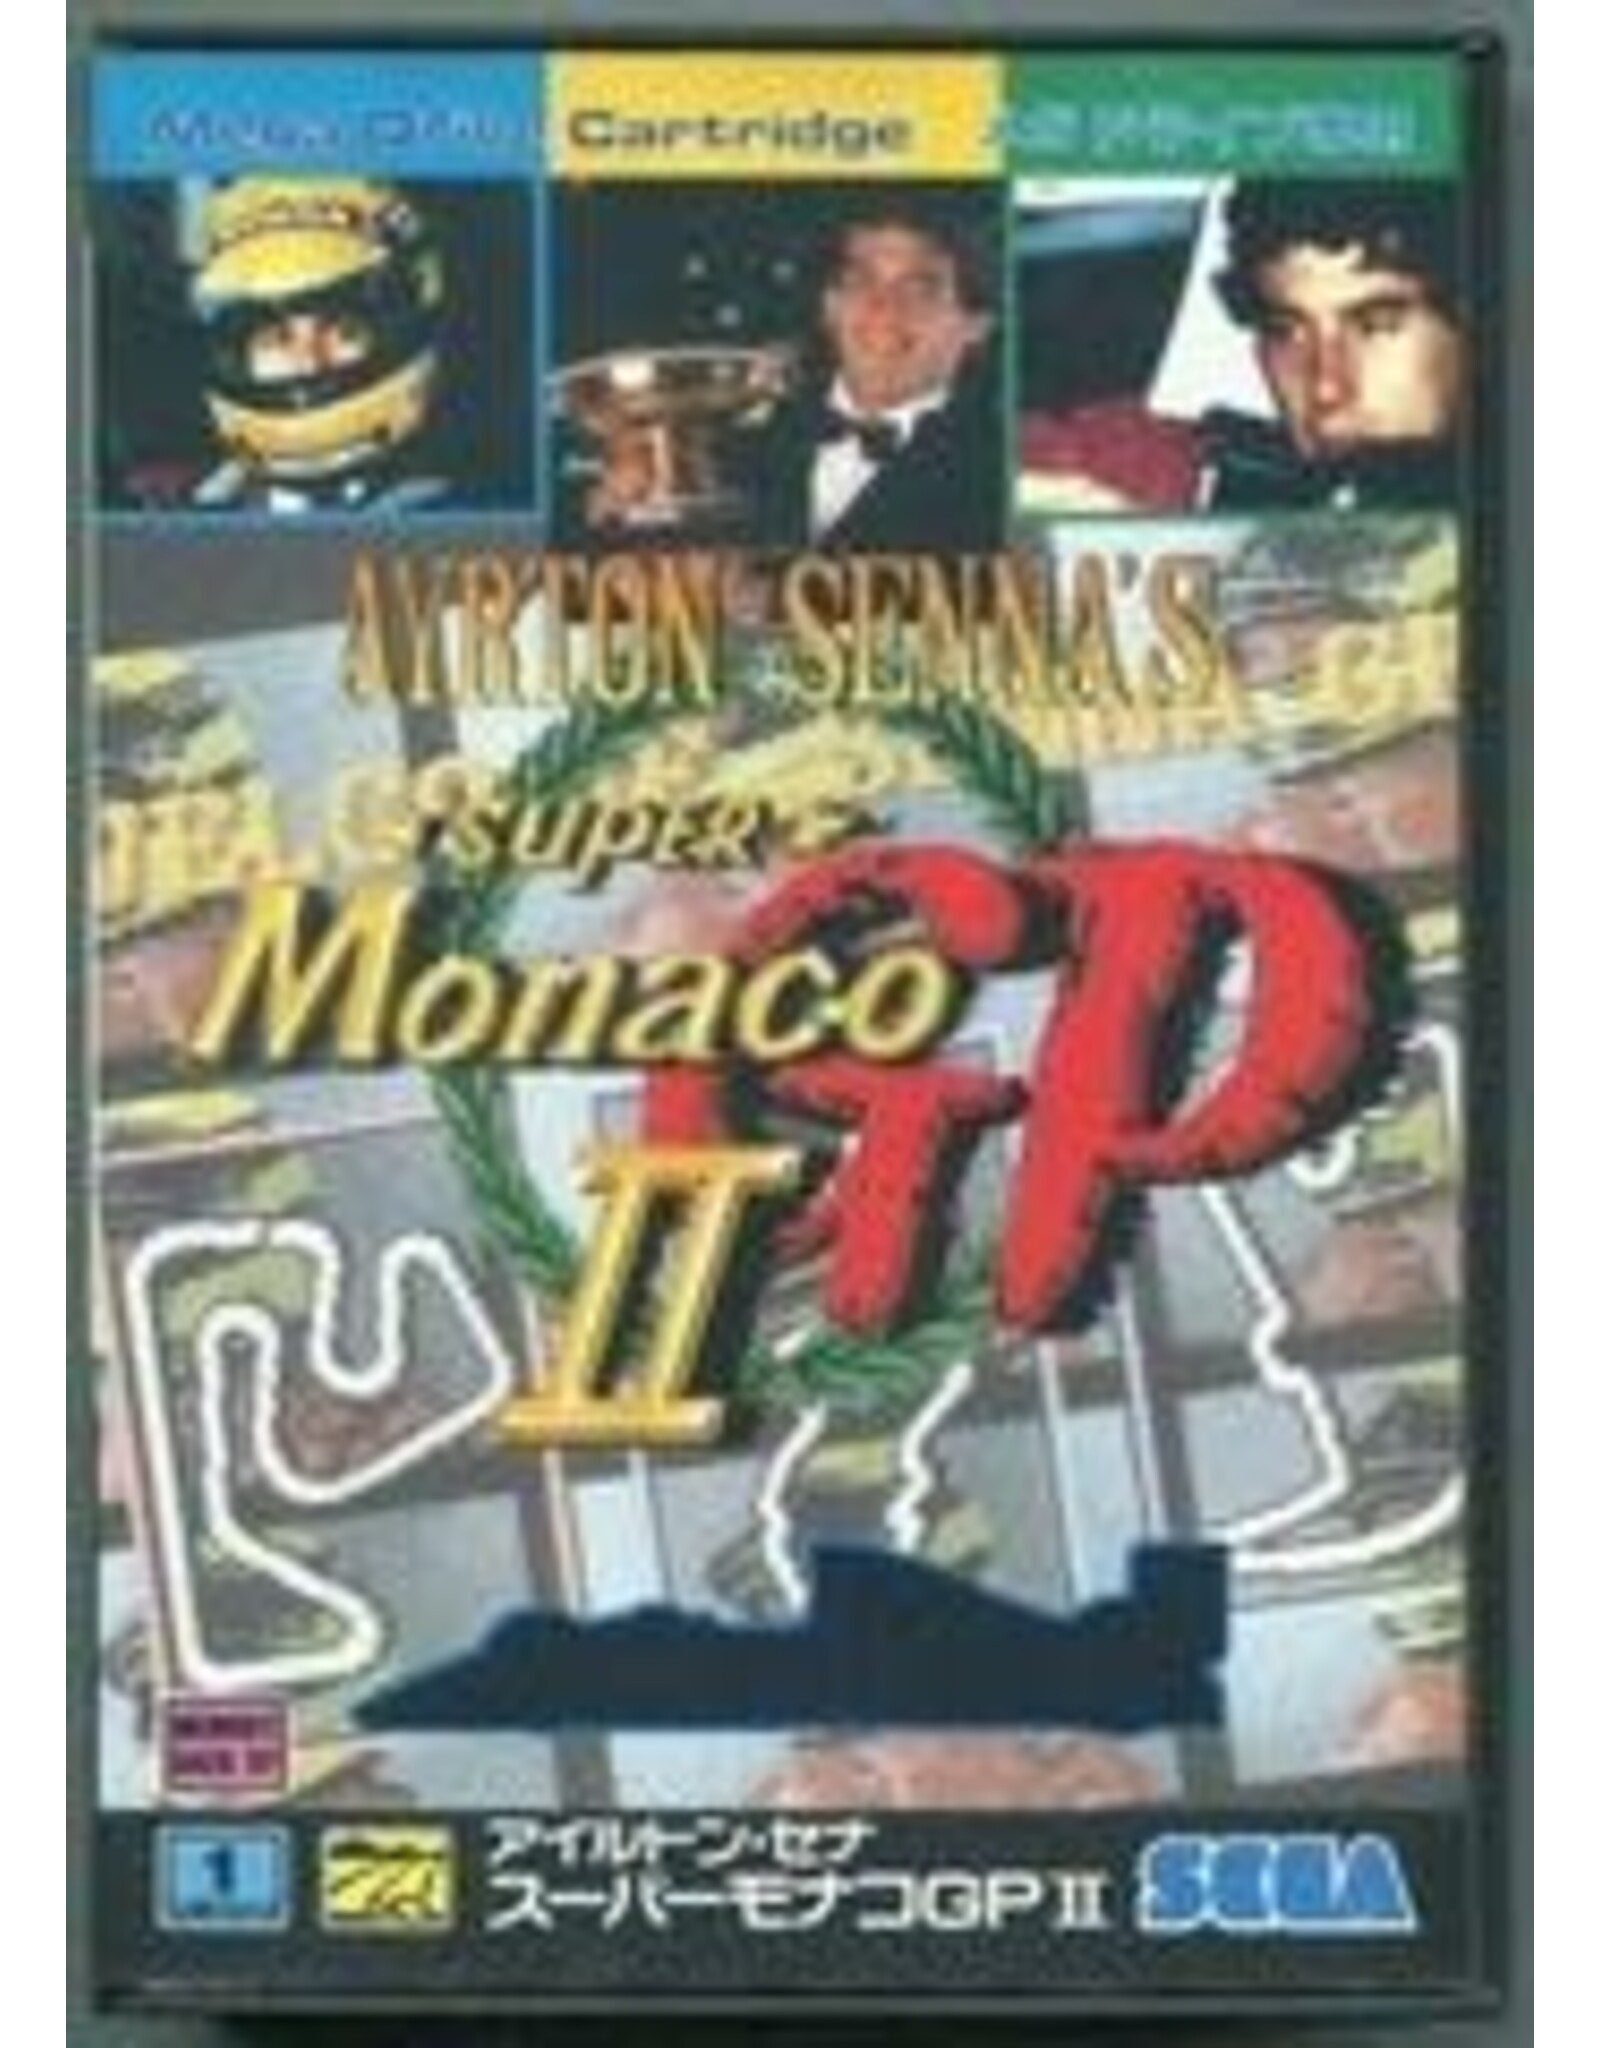 Sega Mega Drive Super Monaco GP II (CiB)